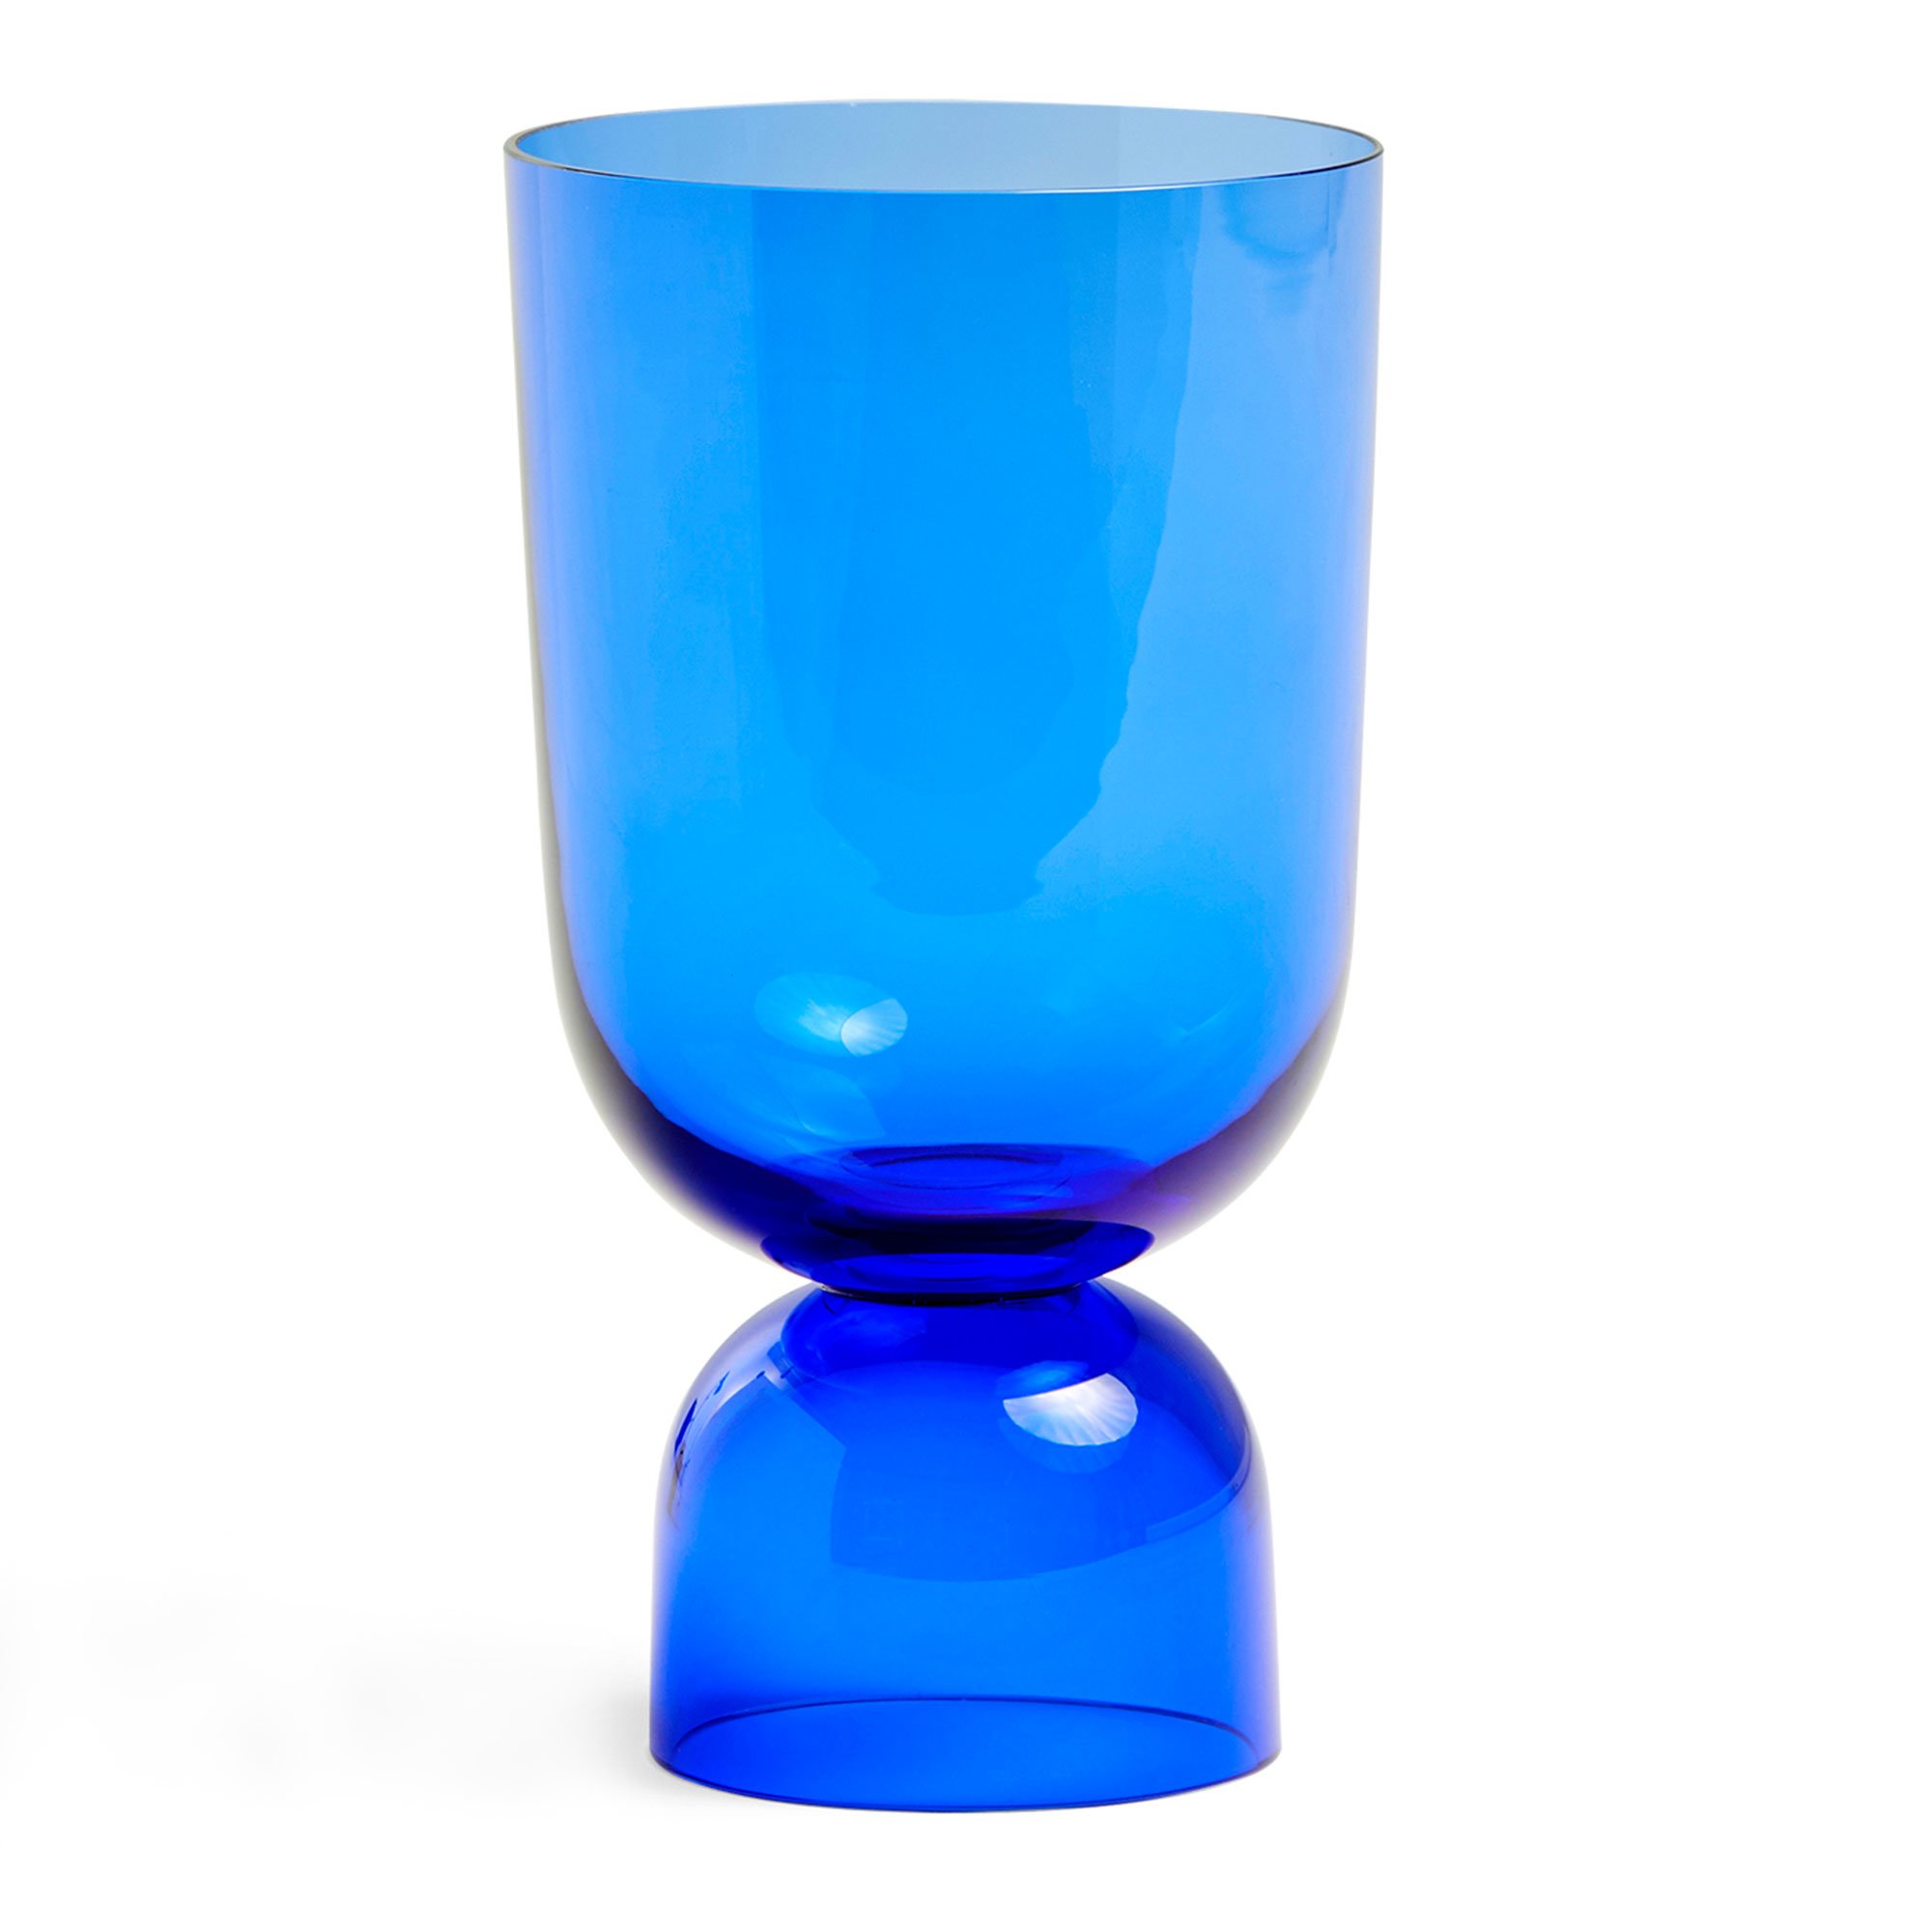 HAY Bottoms Up vas, electric blue